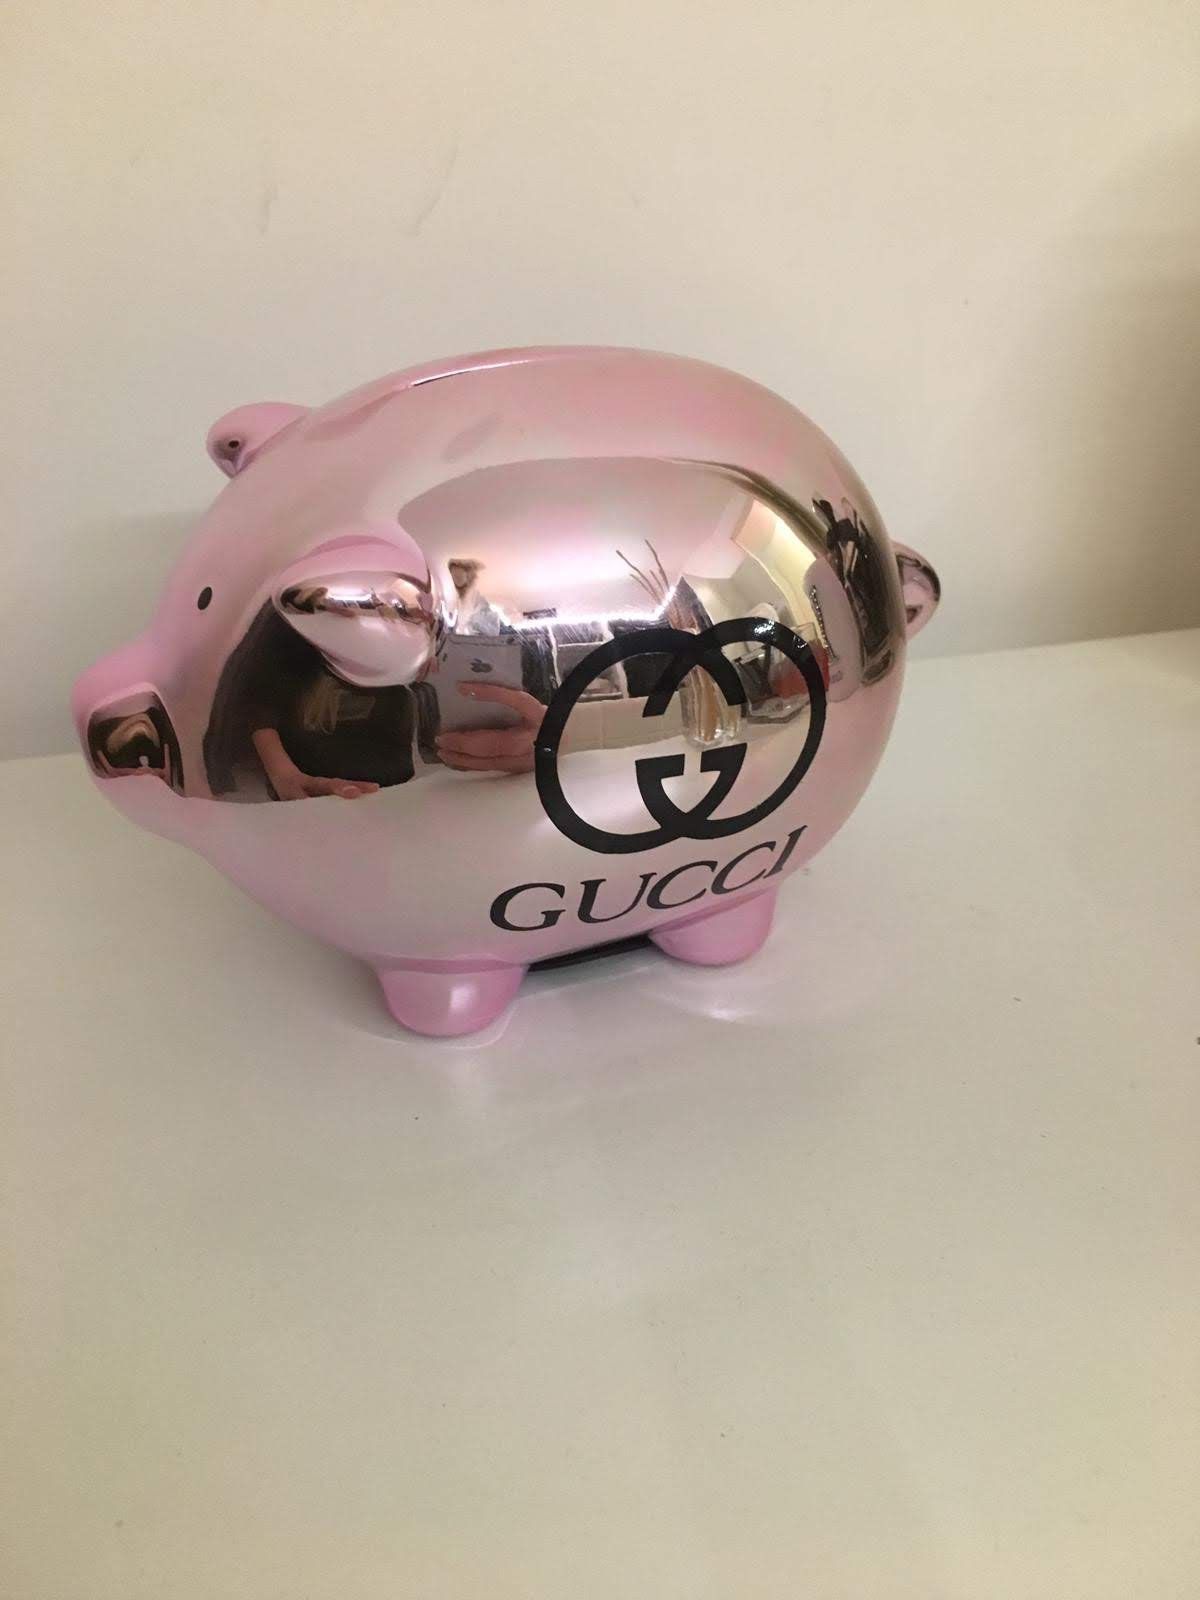 Gucci Piggy Bank - KibrisPDR